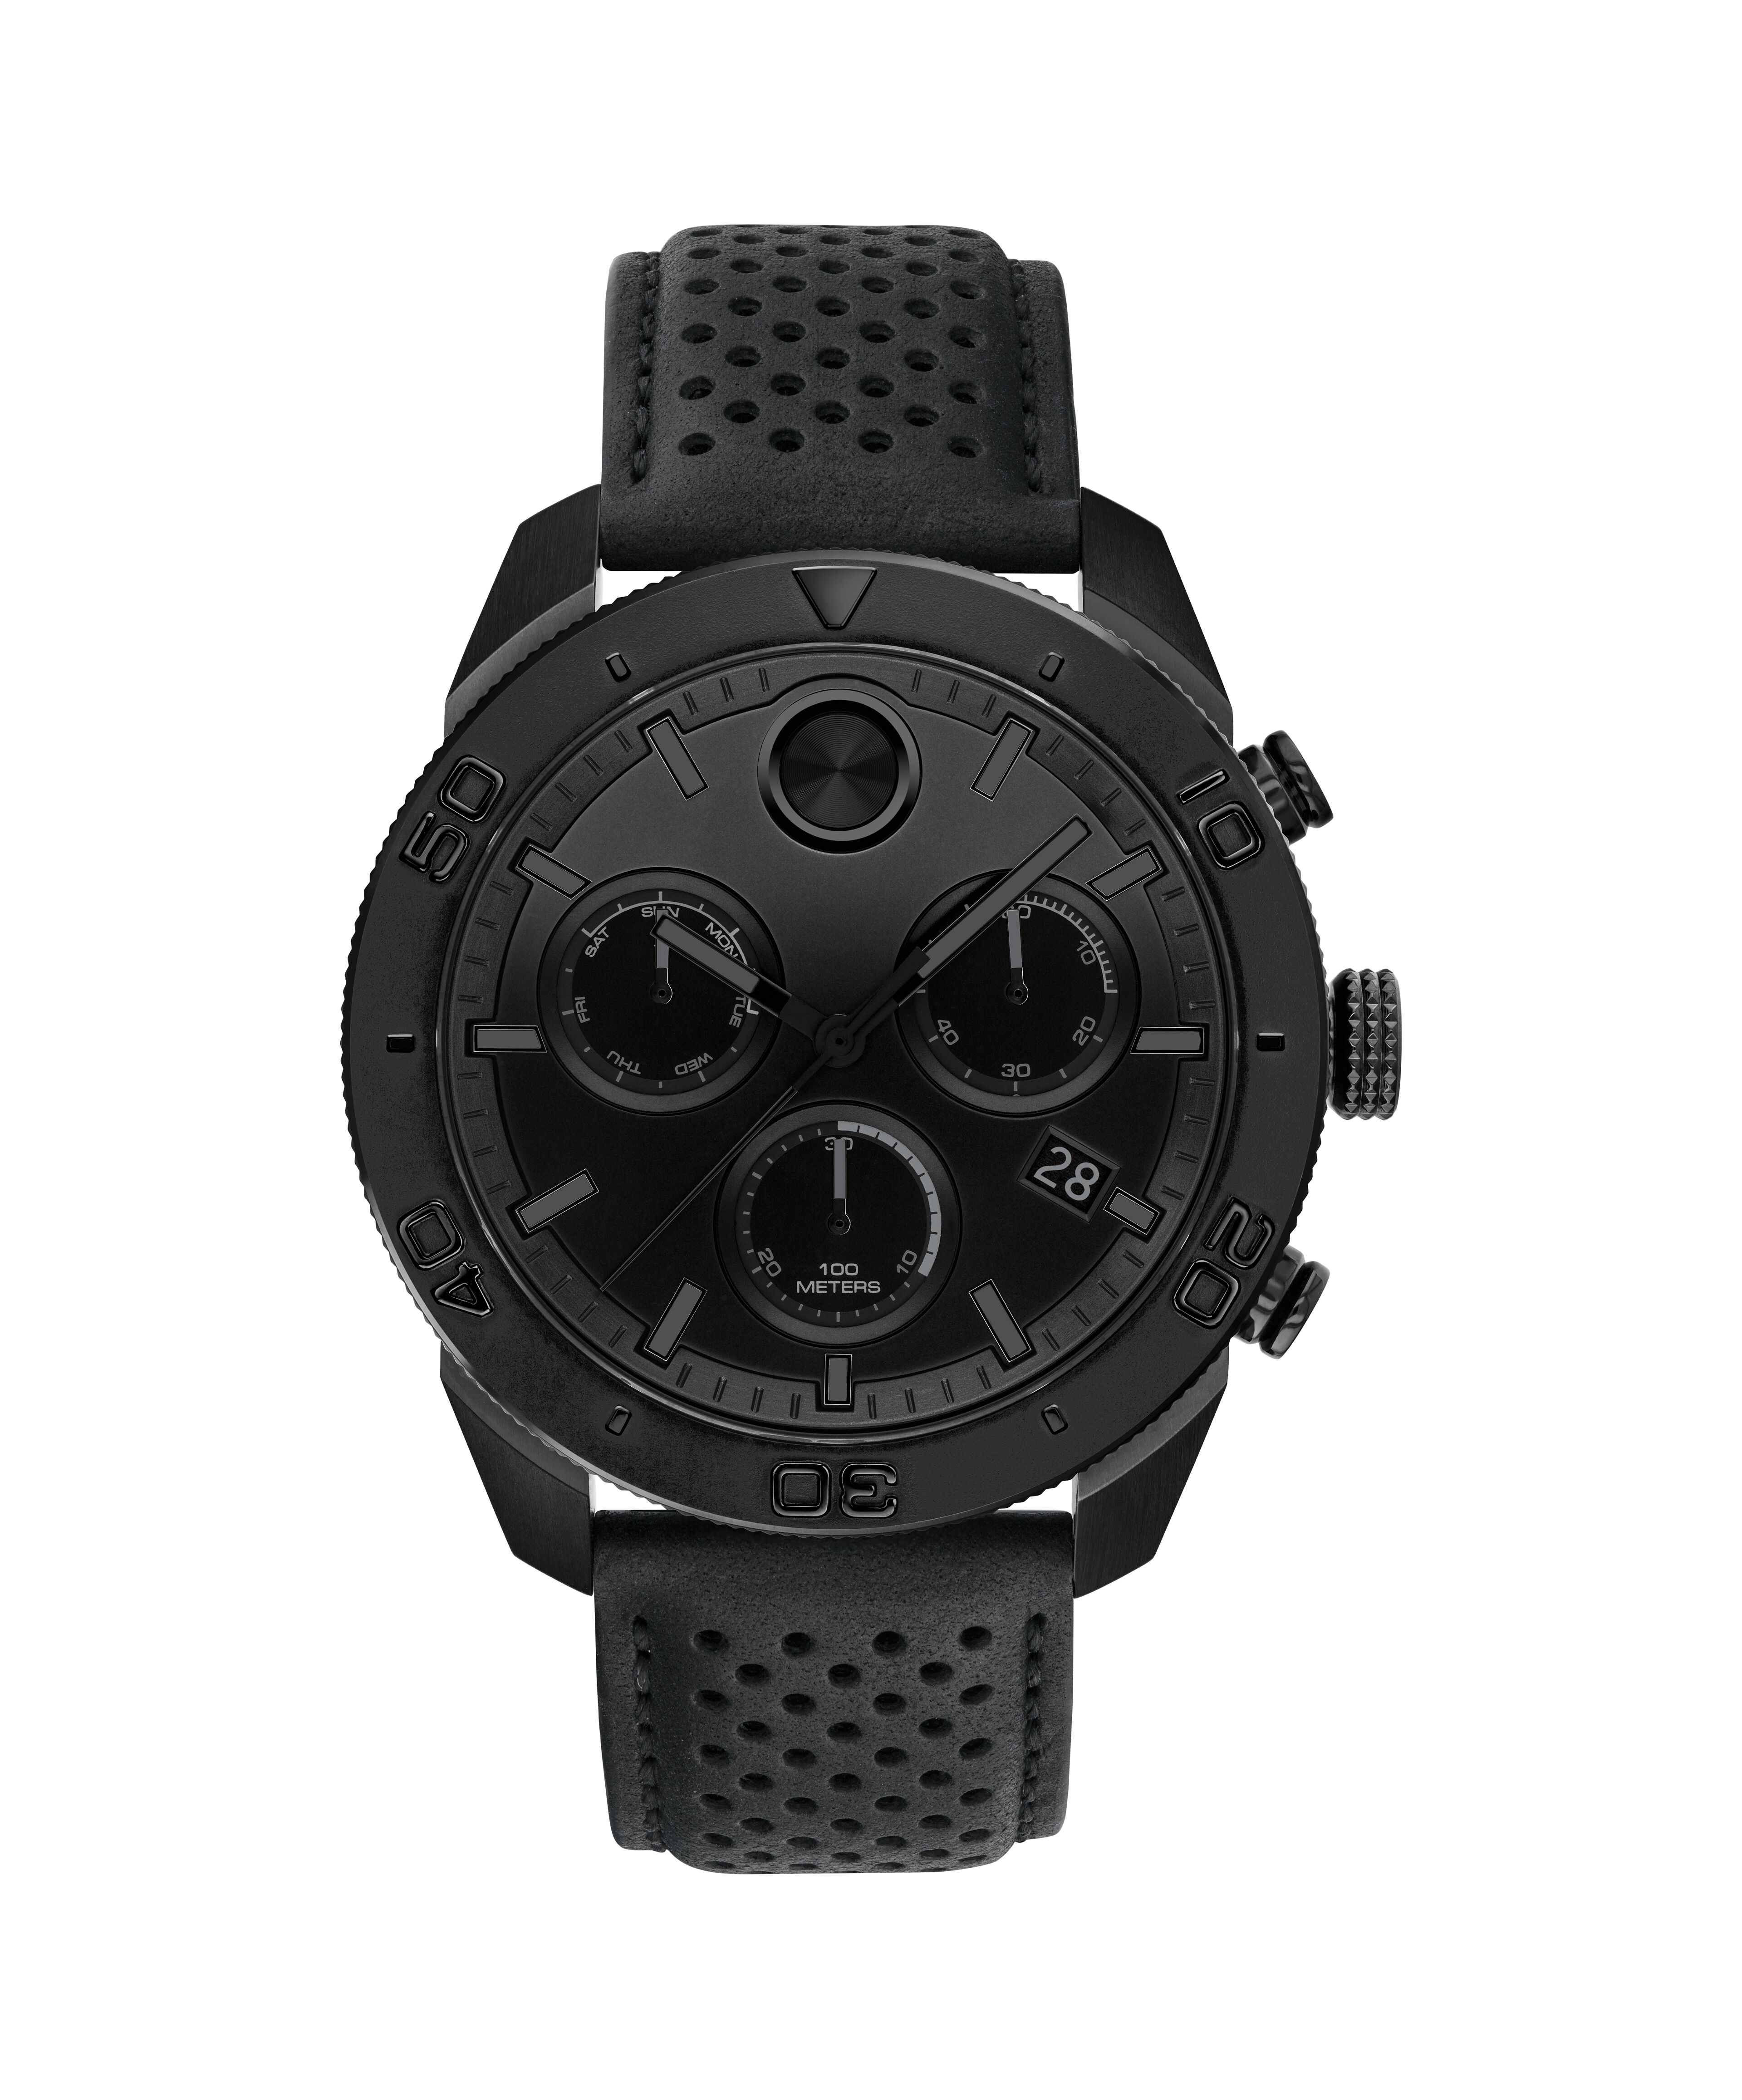 Rolex Submariner Men'S Luxury Diver Watch Black Dial 114060 Replica